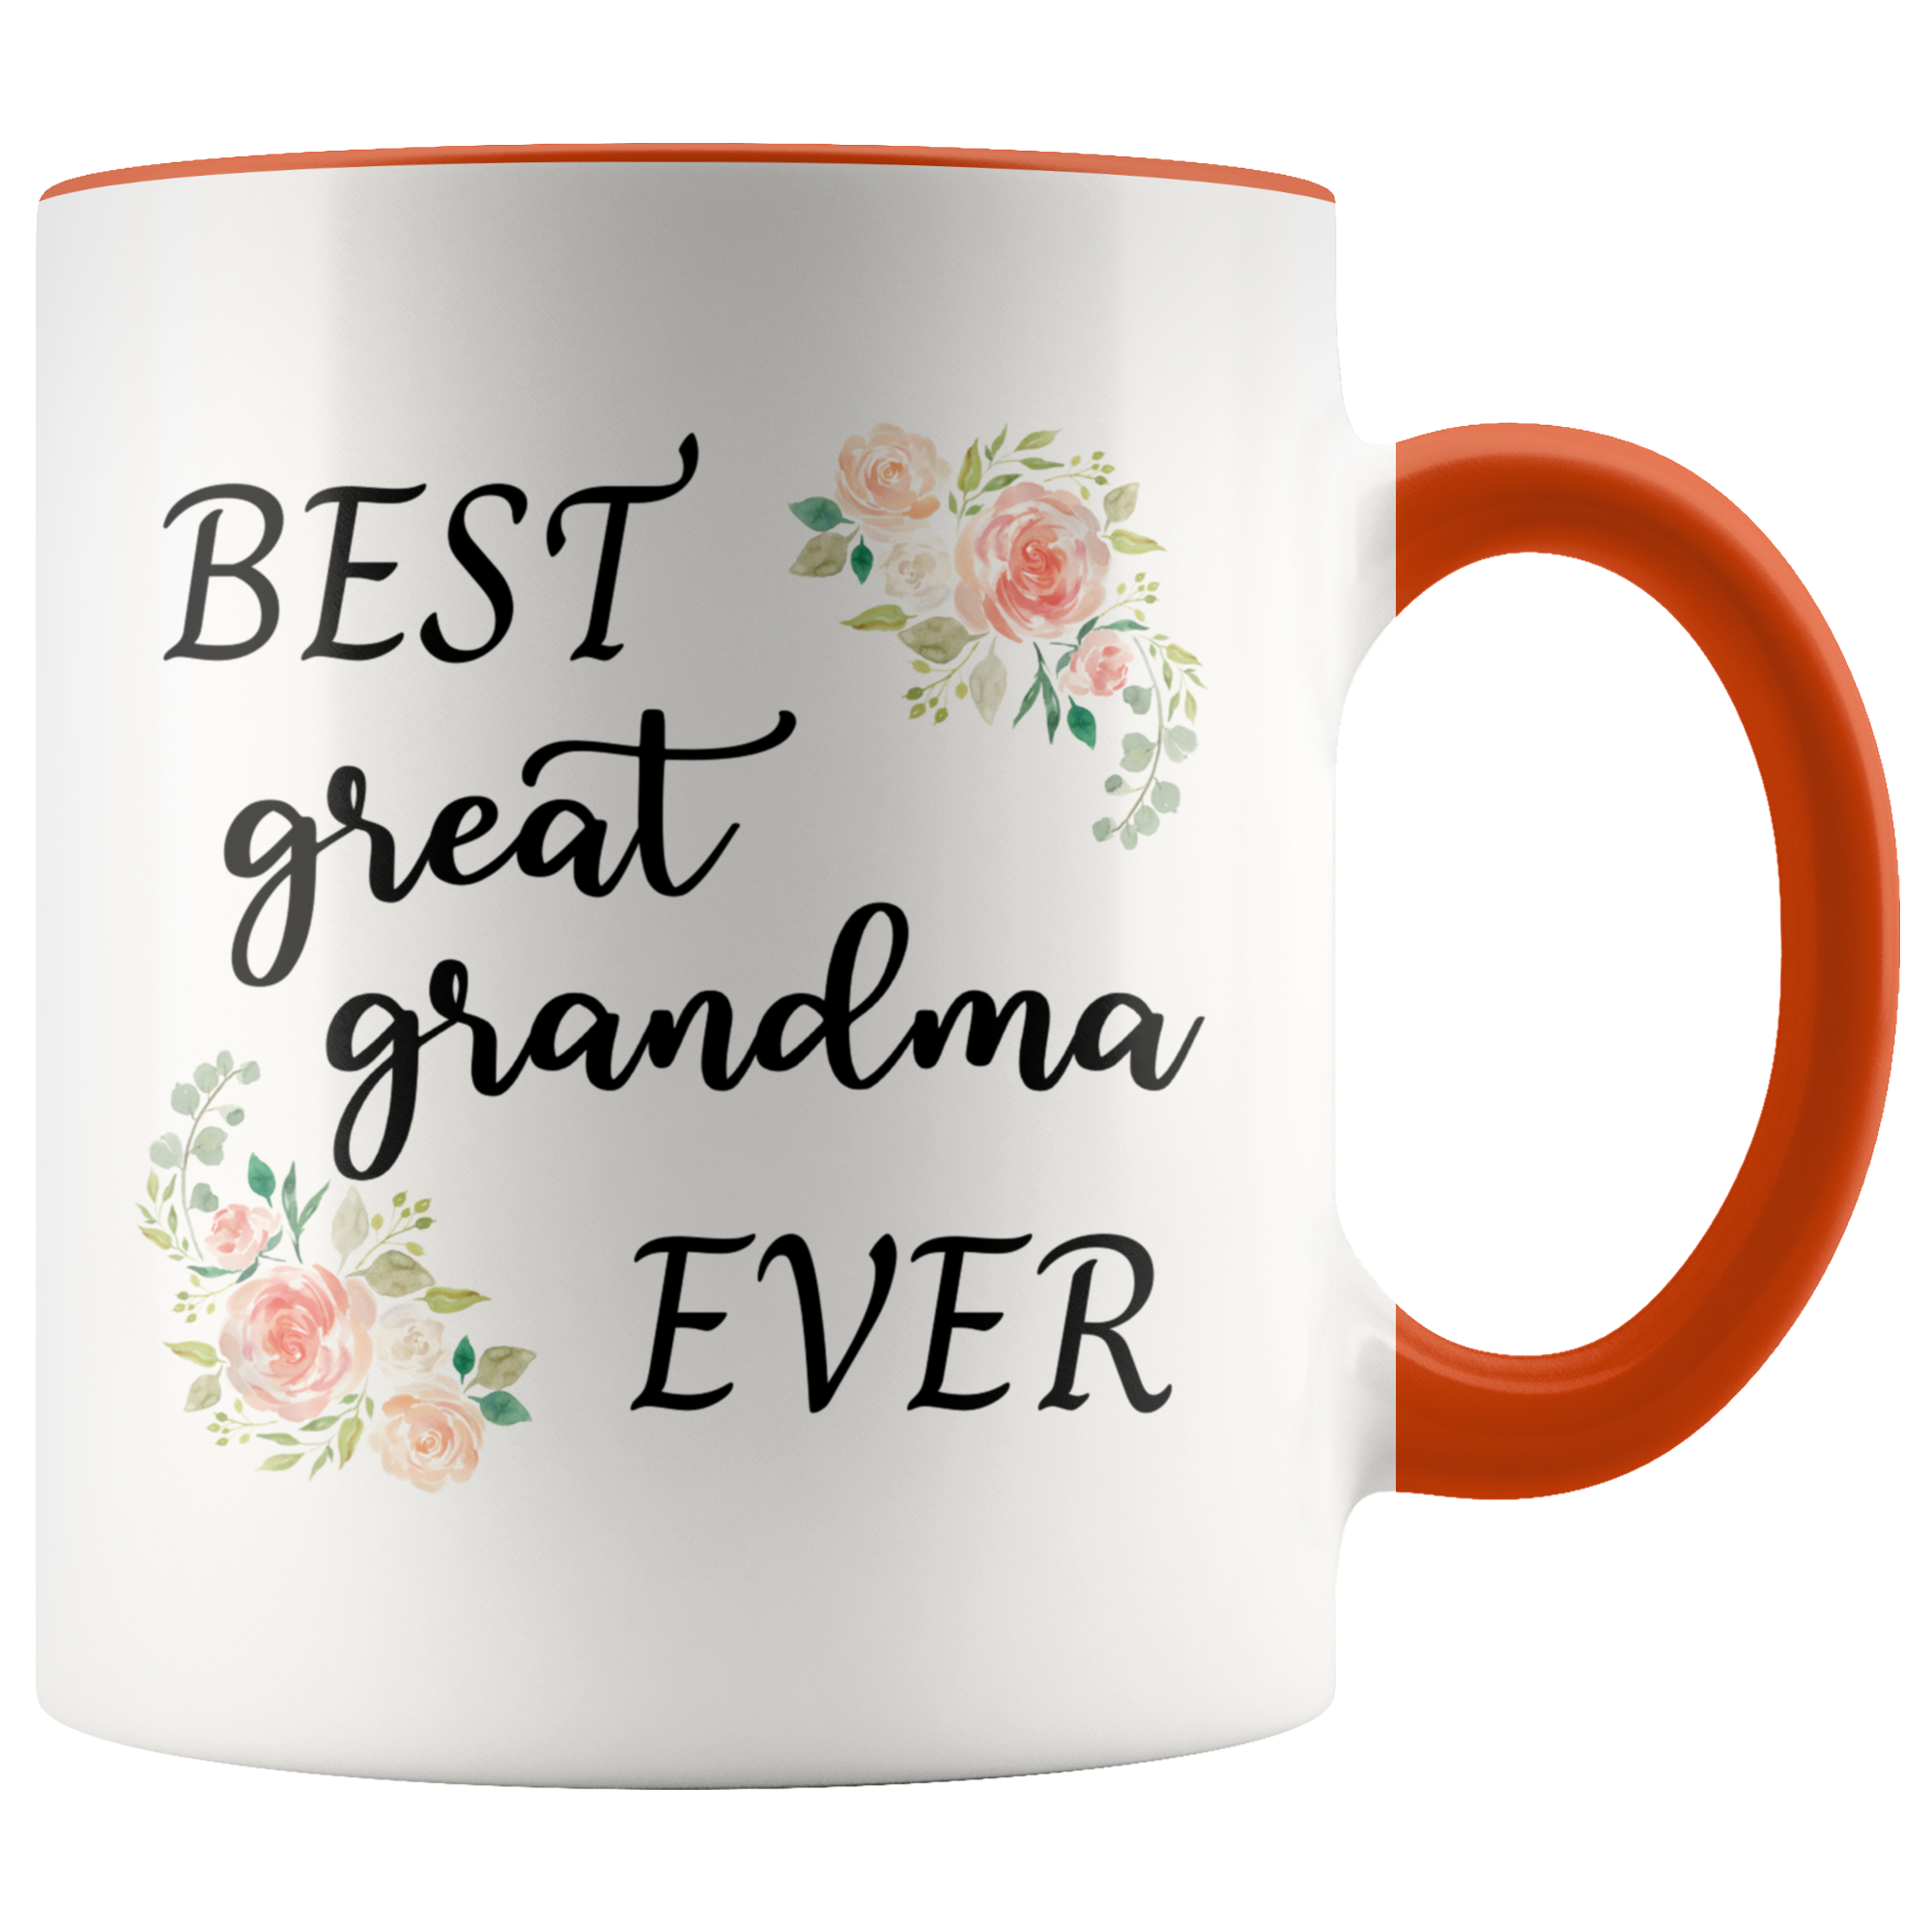 Best Great Grandma Mug